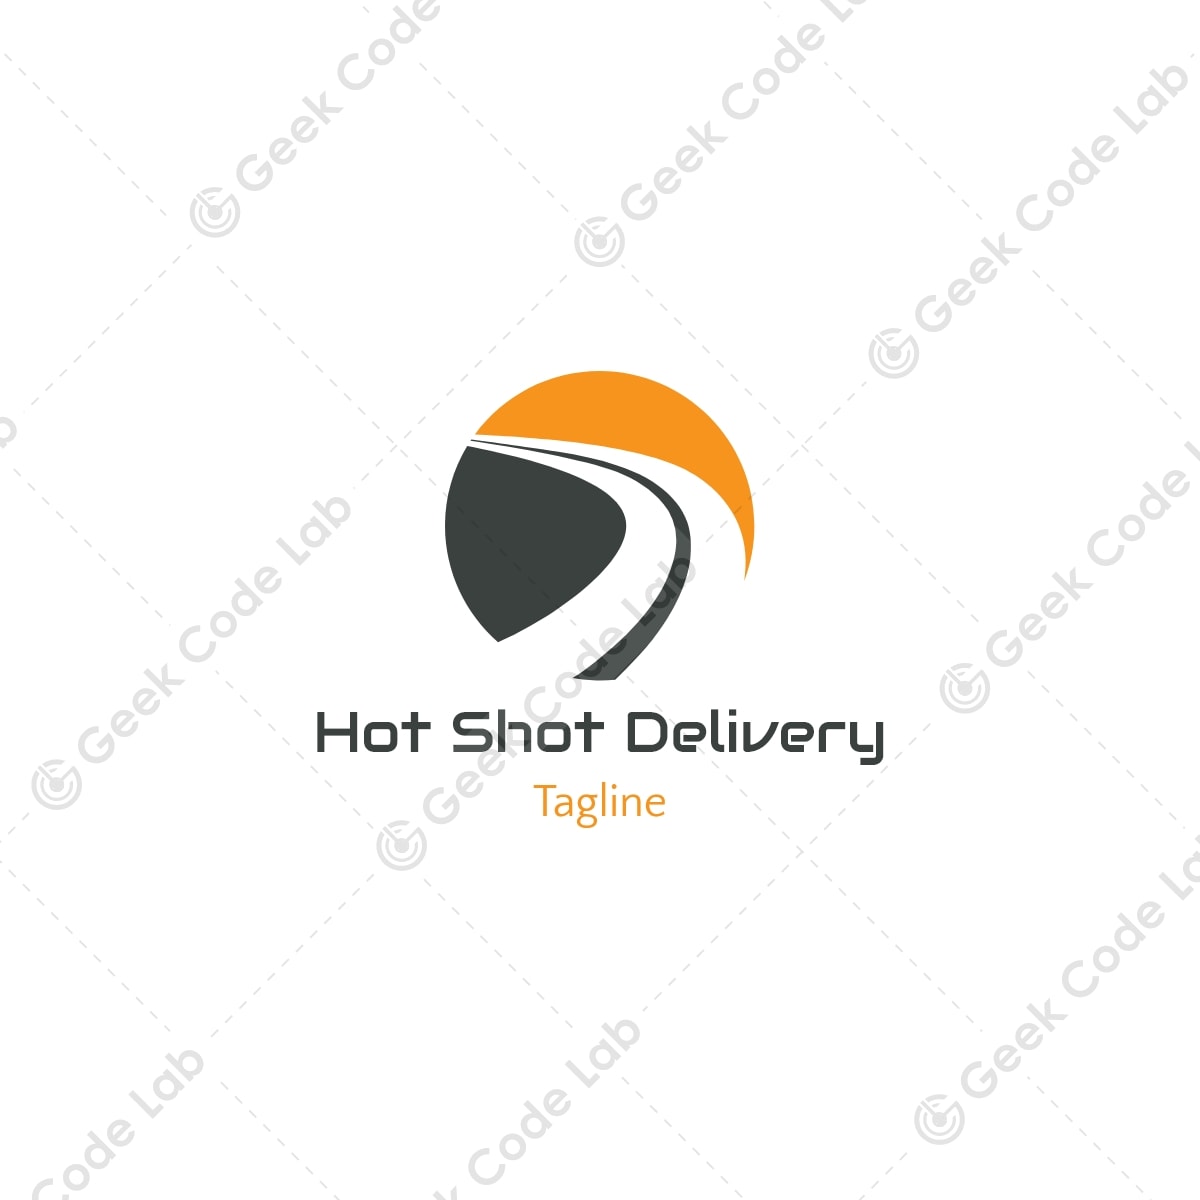 Hot Shot Delivery